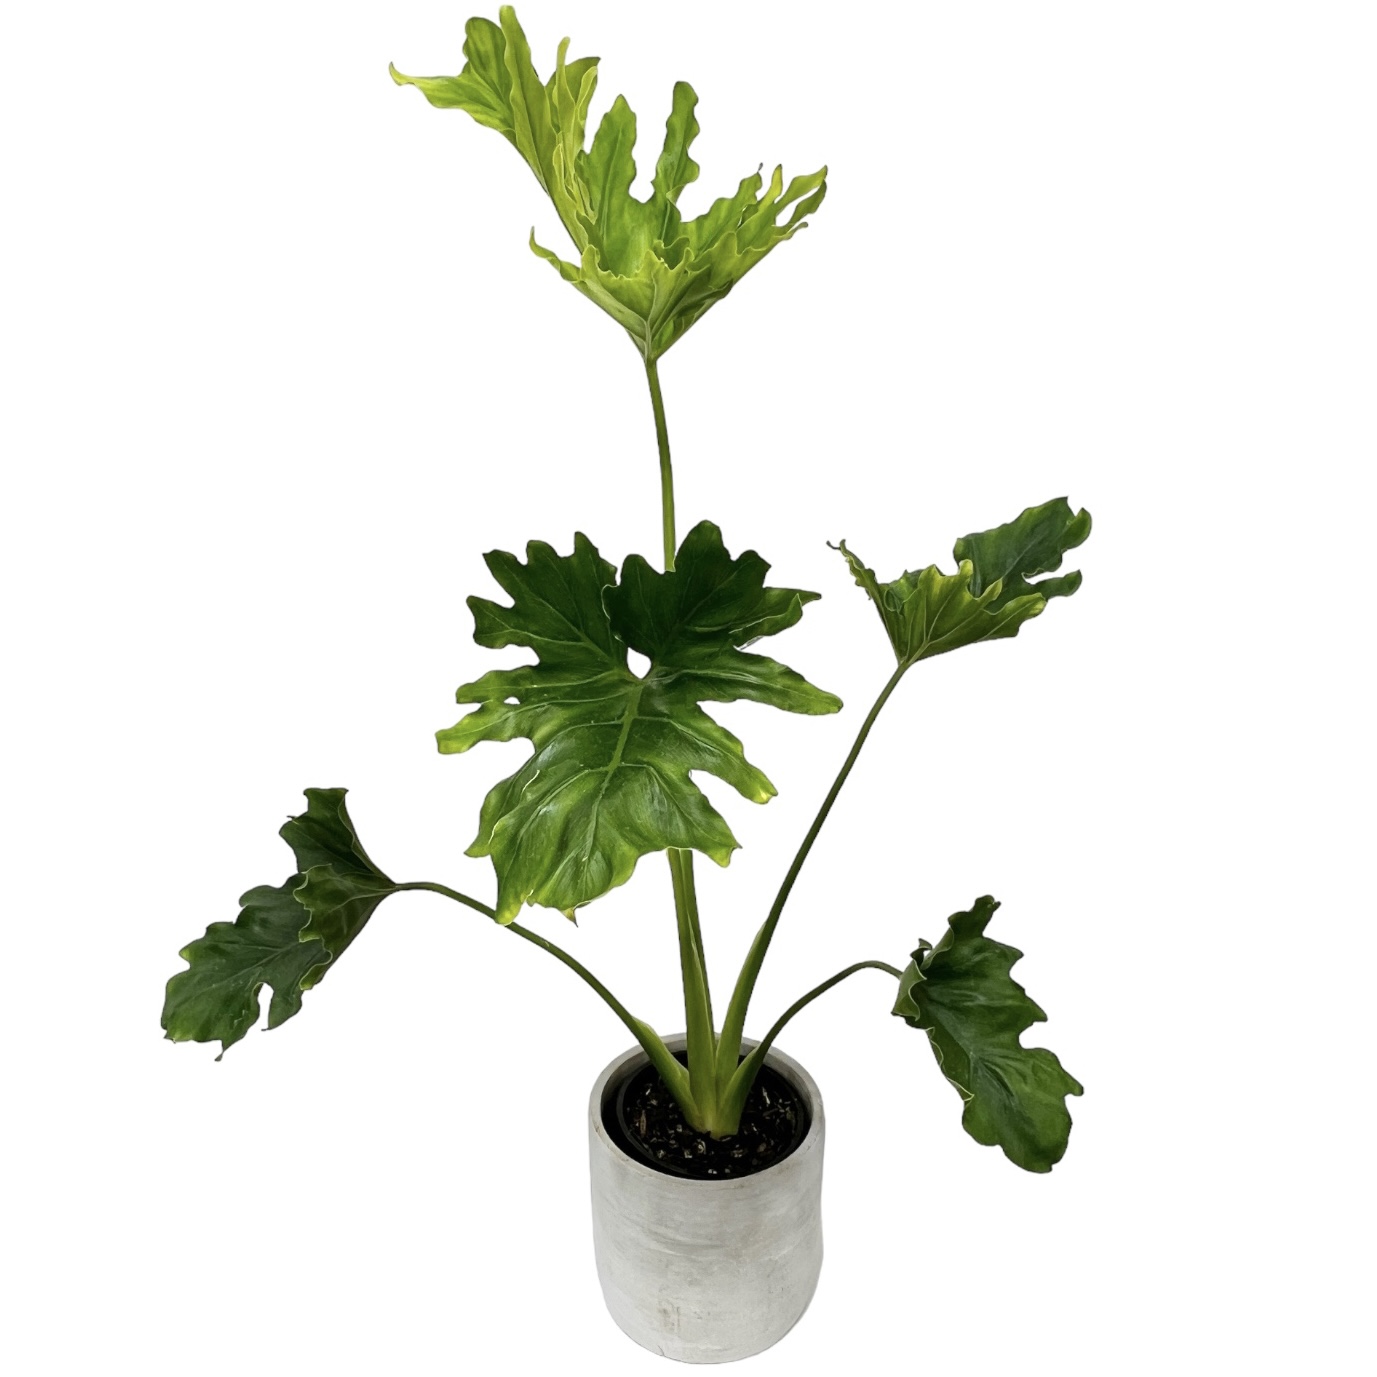 Triple stem phalaenopsis plant in ceramic pot - Melbourne delivery only